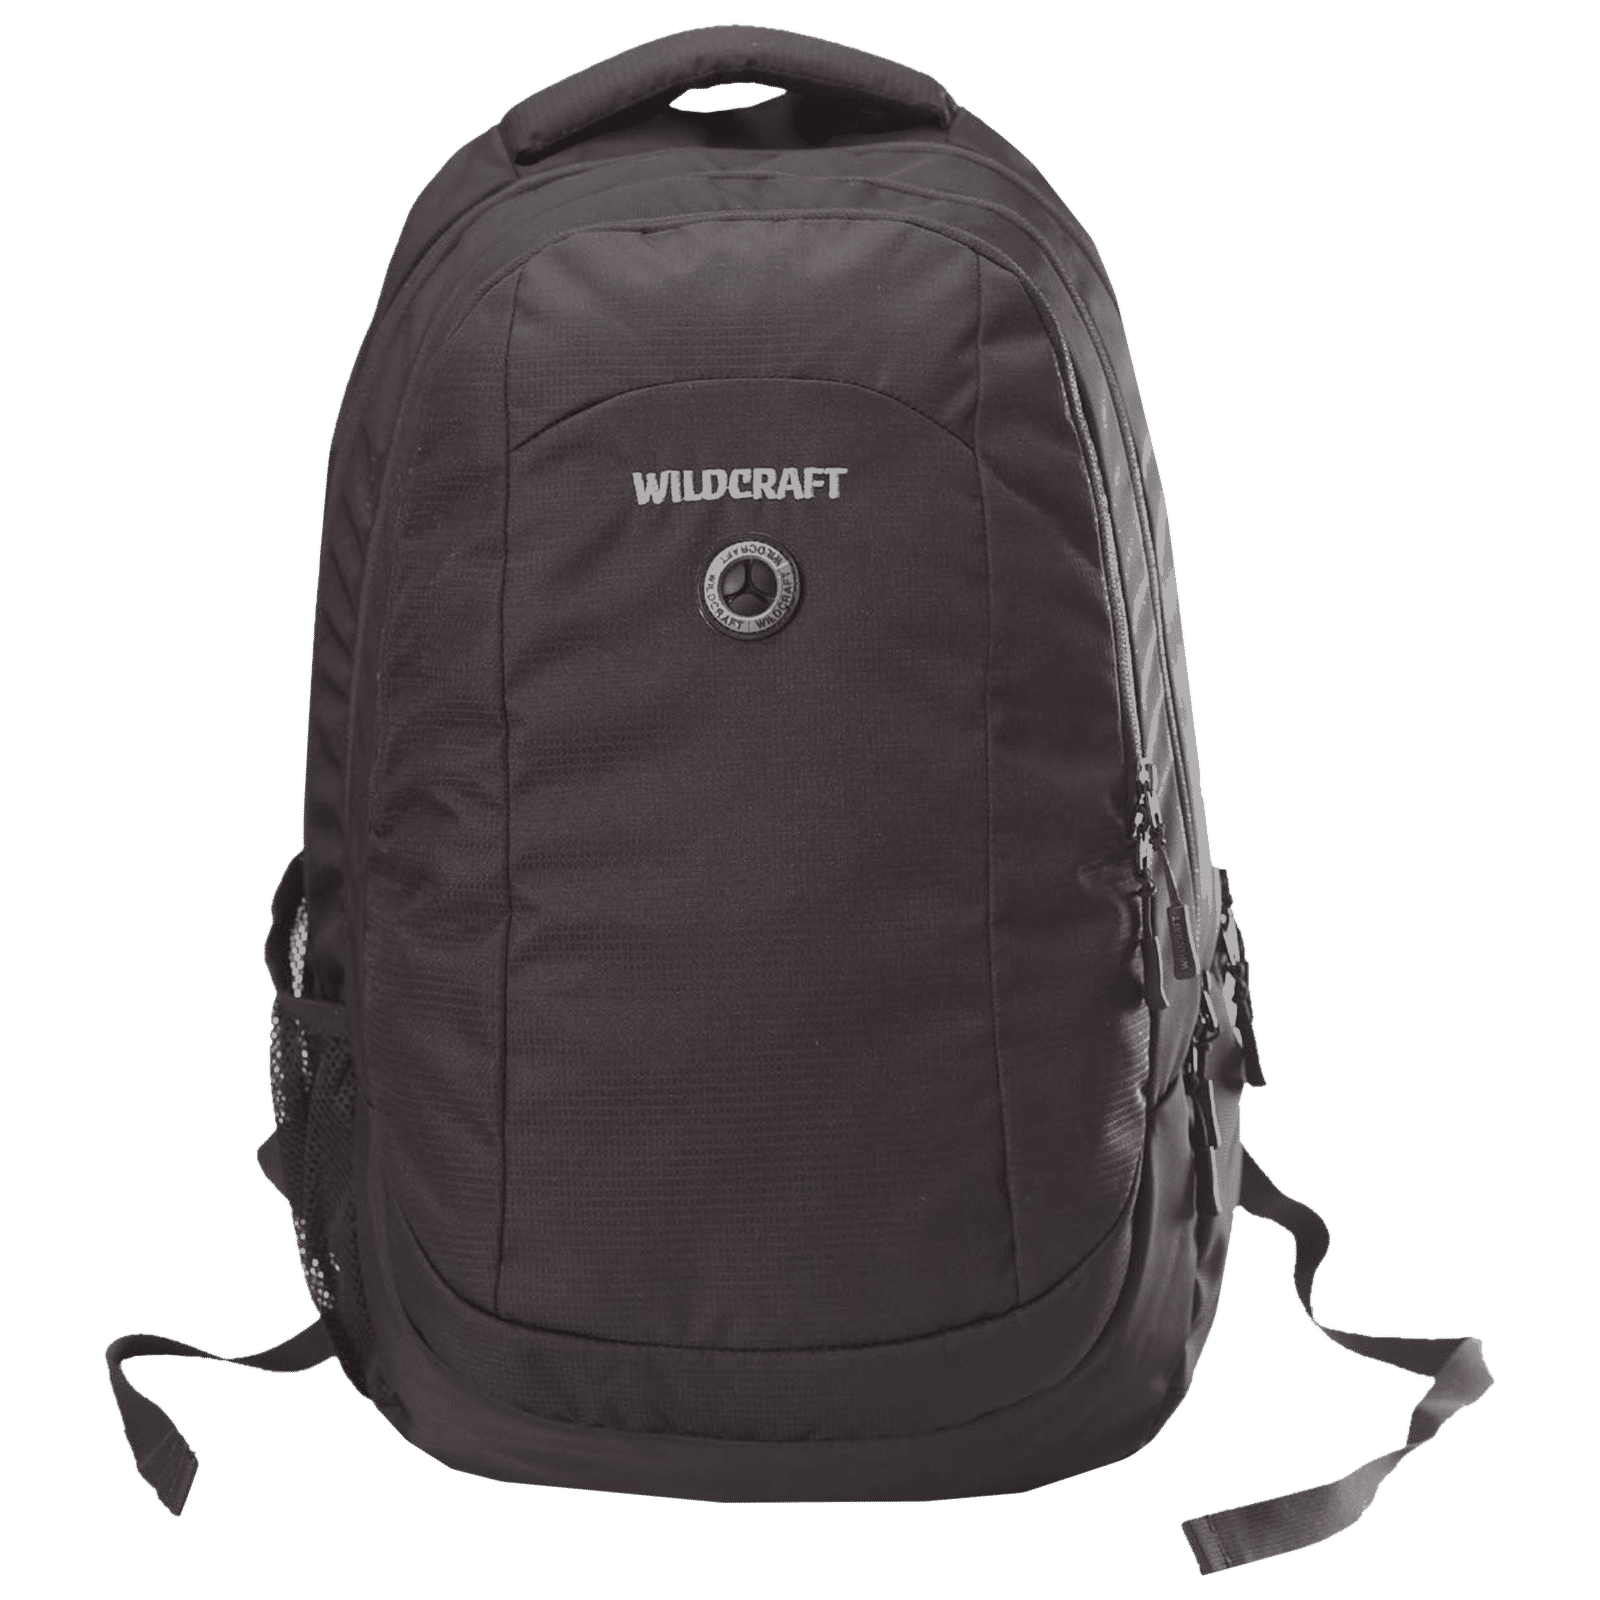 Wildcraft LUL1 Backpack